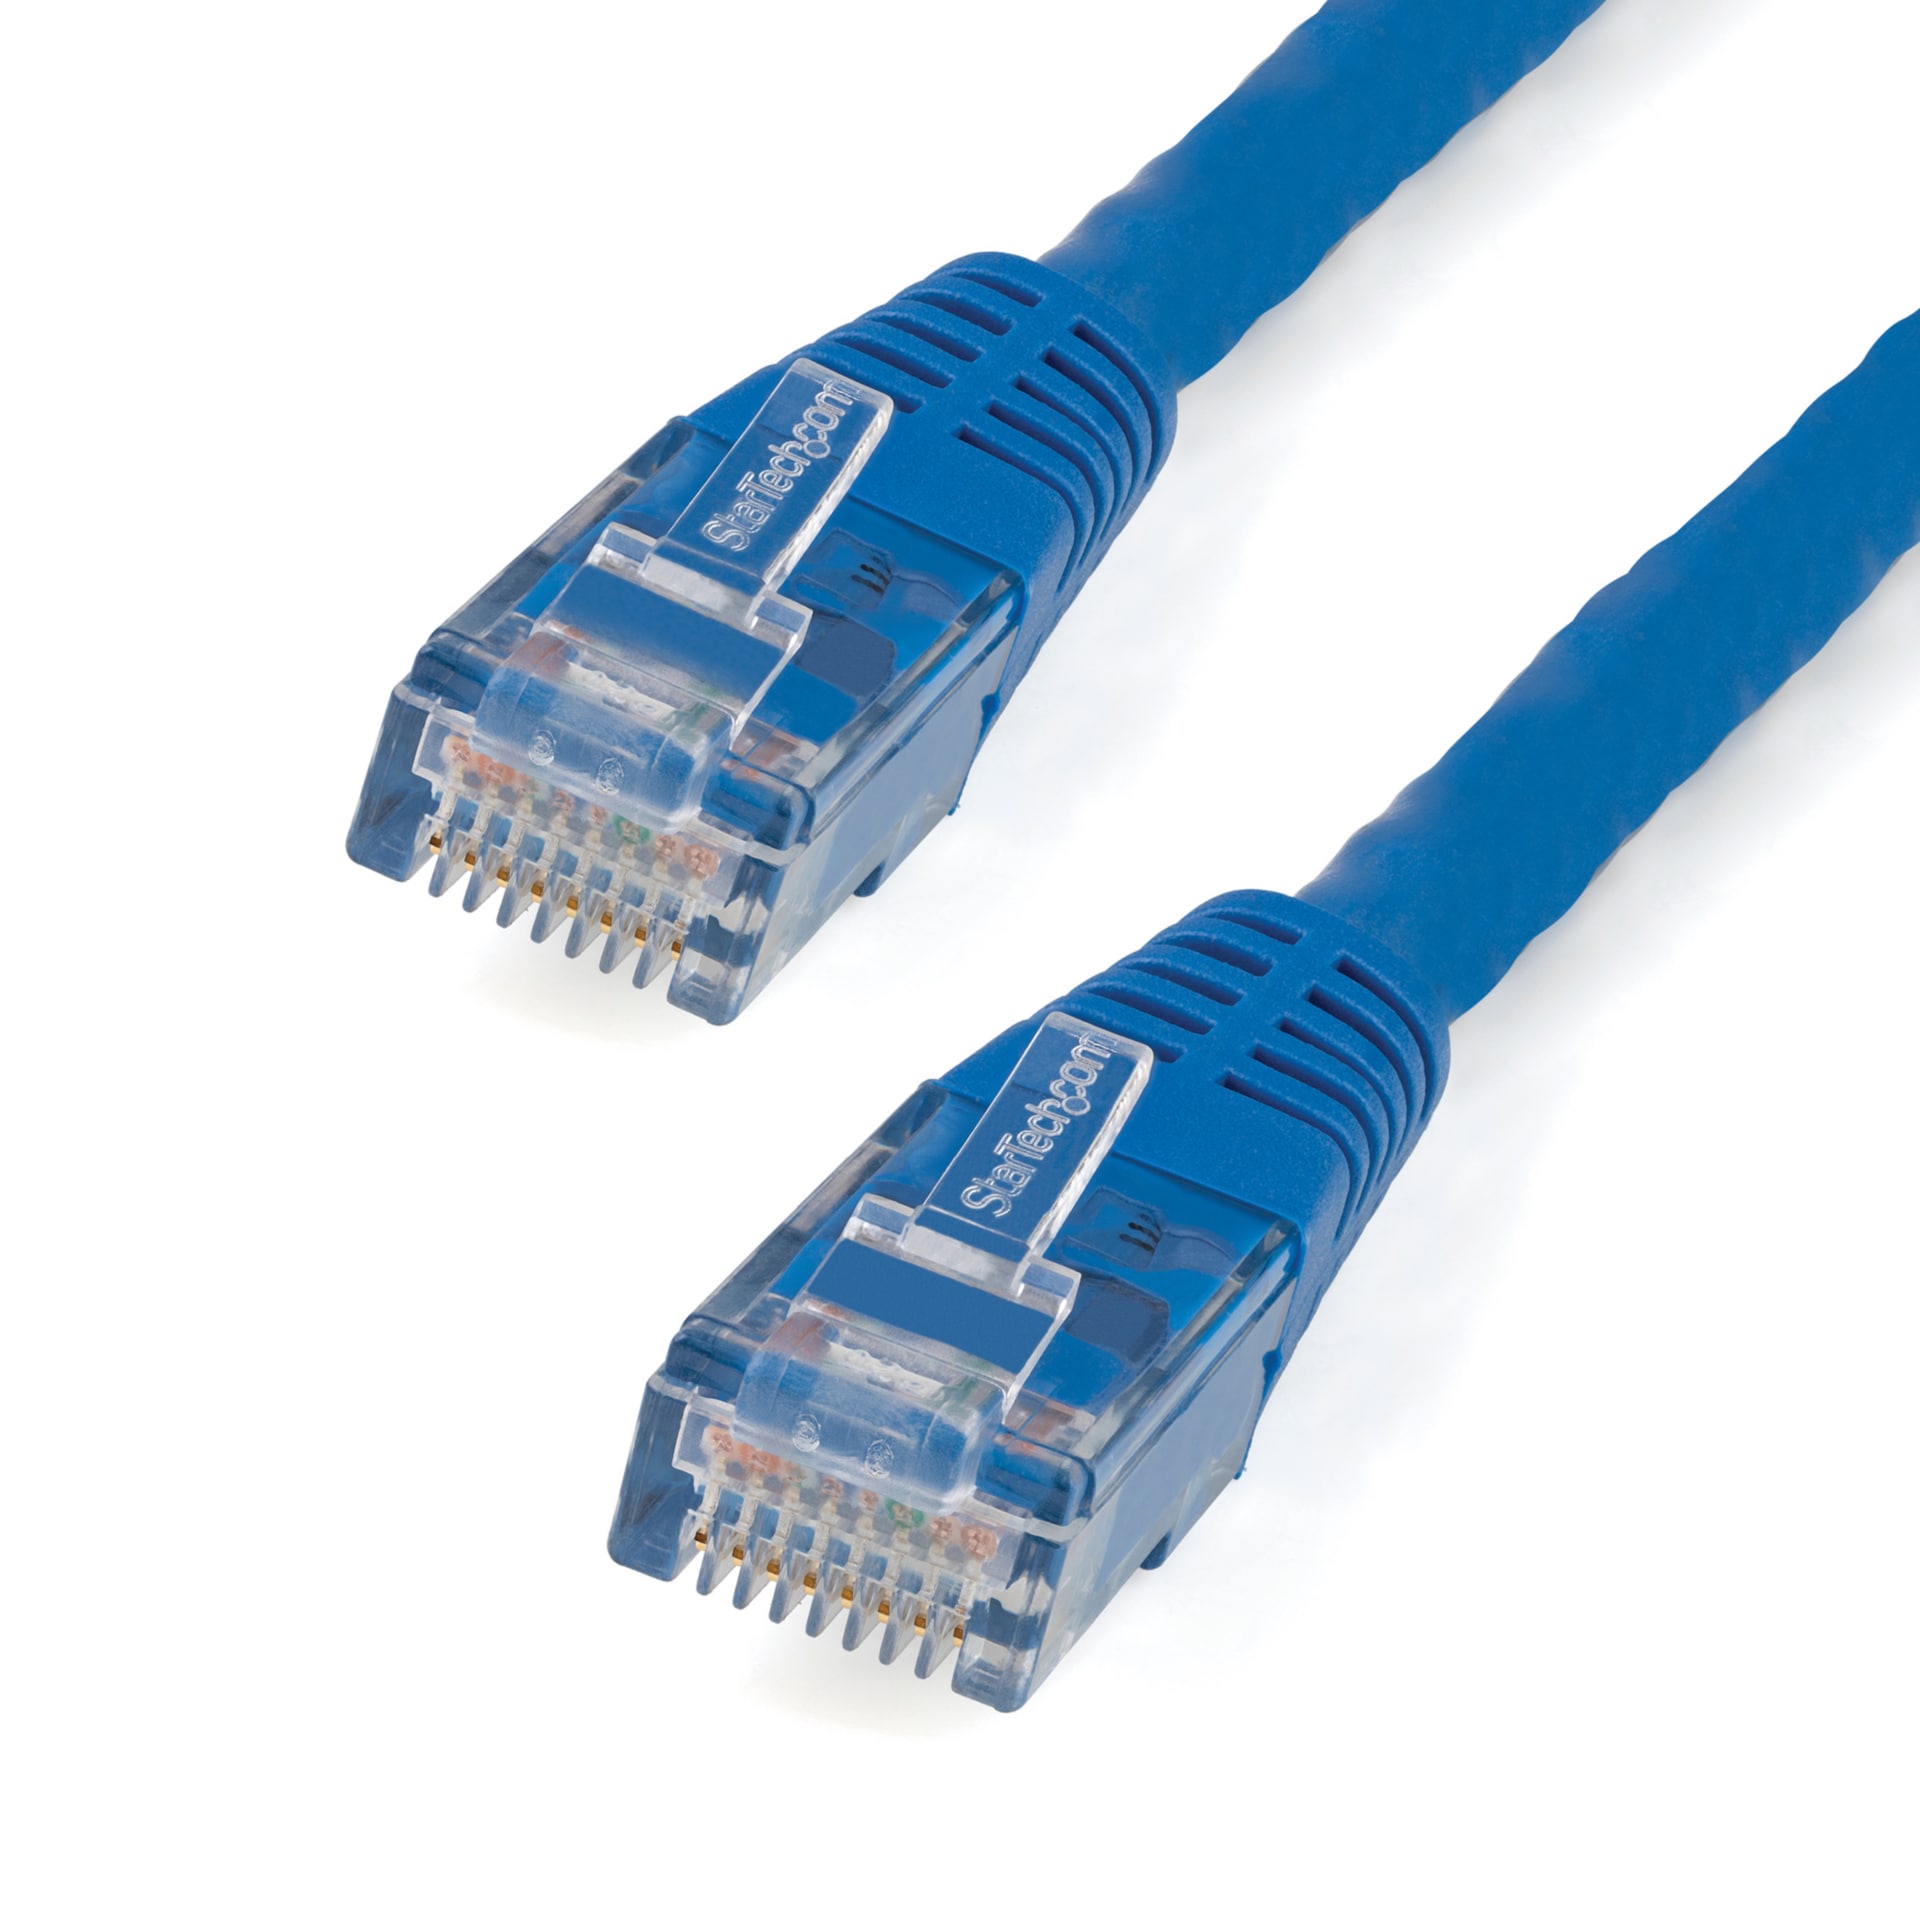 StarTech.com 25ft CAT6 Ethernet Cable - Blue CAT 6 Gigabit Wire 100W PoE 650MHz Molded Patch Cord